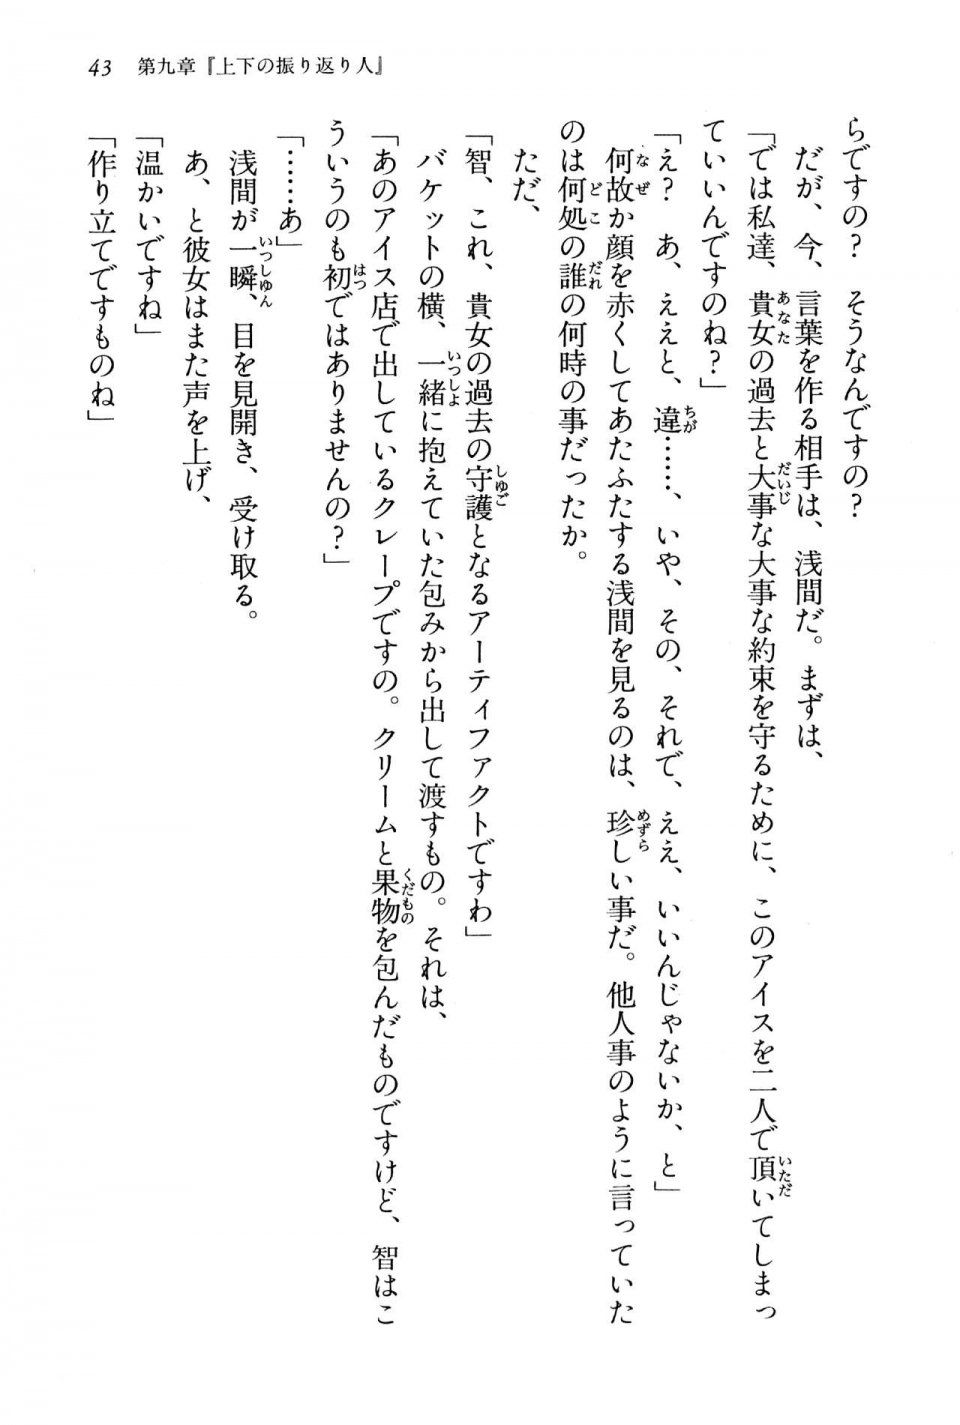 Kyoukai Senjou no Horizon BD Special Mininovel Vol 3(2A) - Photo #47